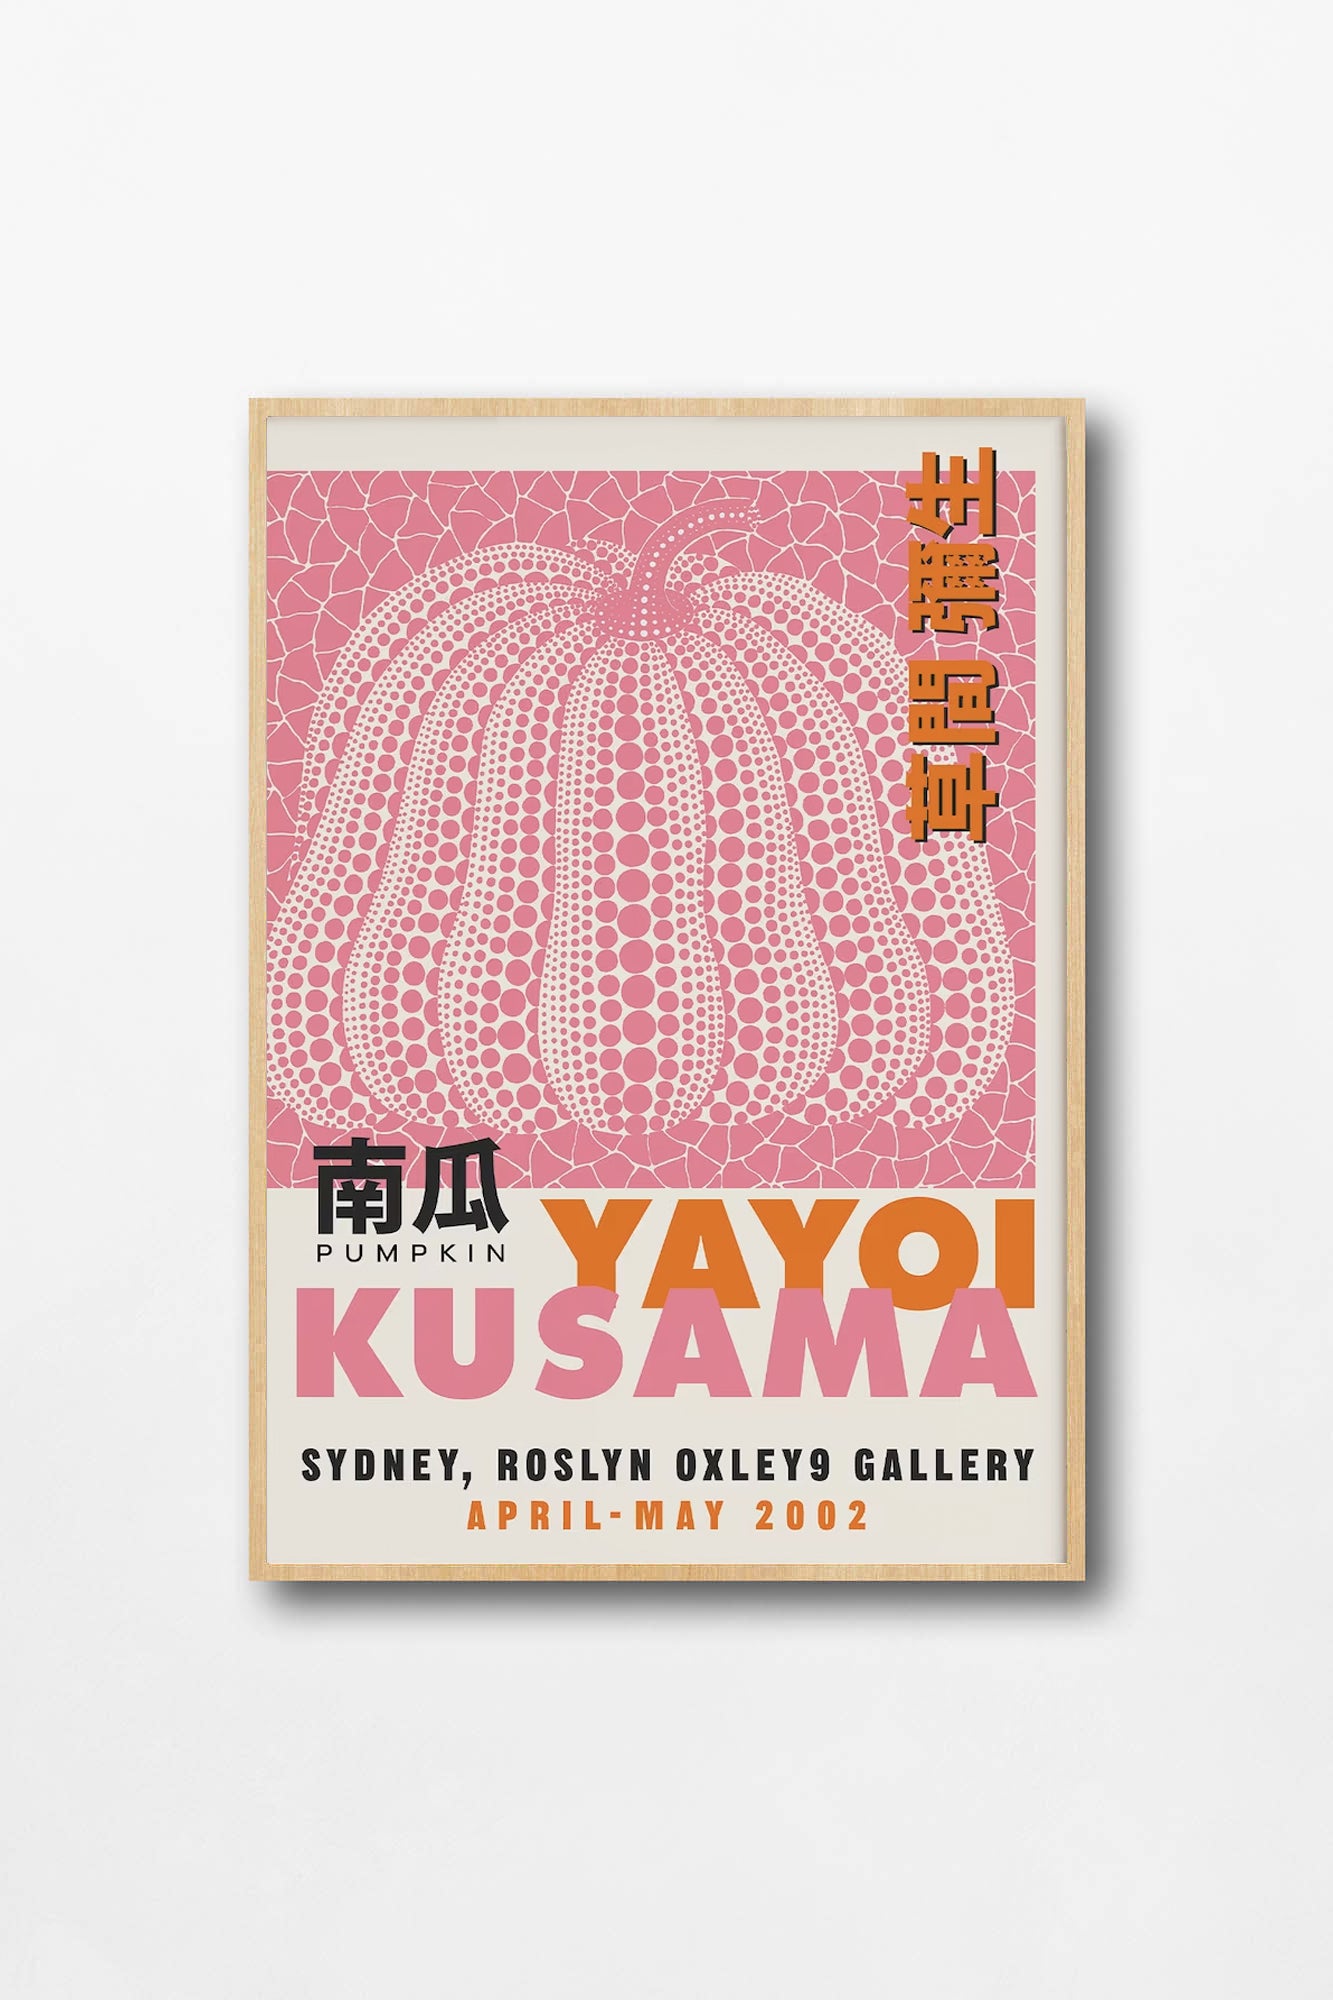 Yayoi Kusama: Yayoi Kusama, 2002 - Roslyn Oxley9 Gallery